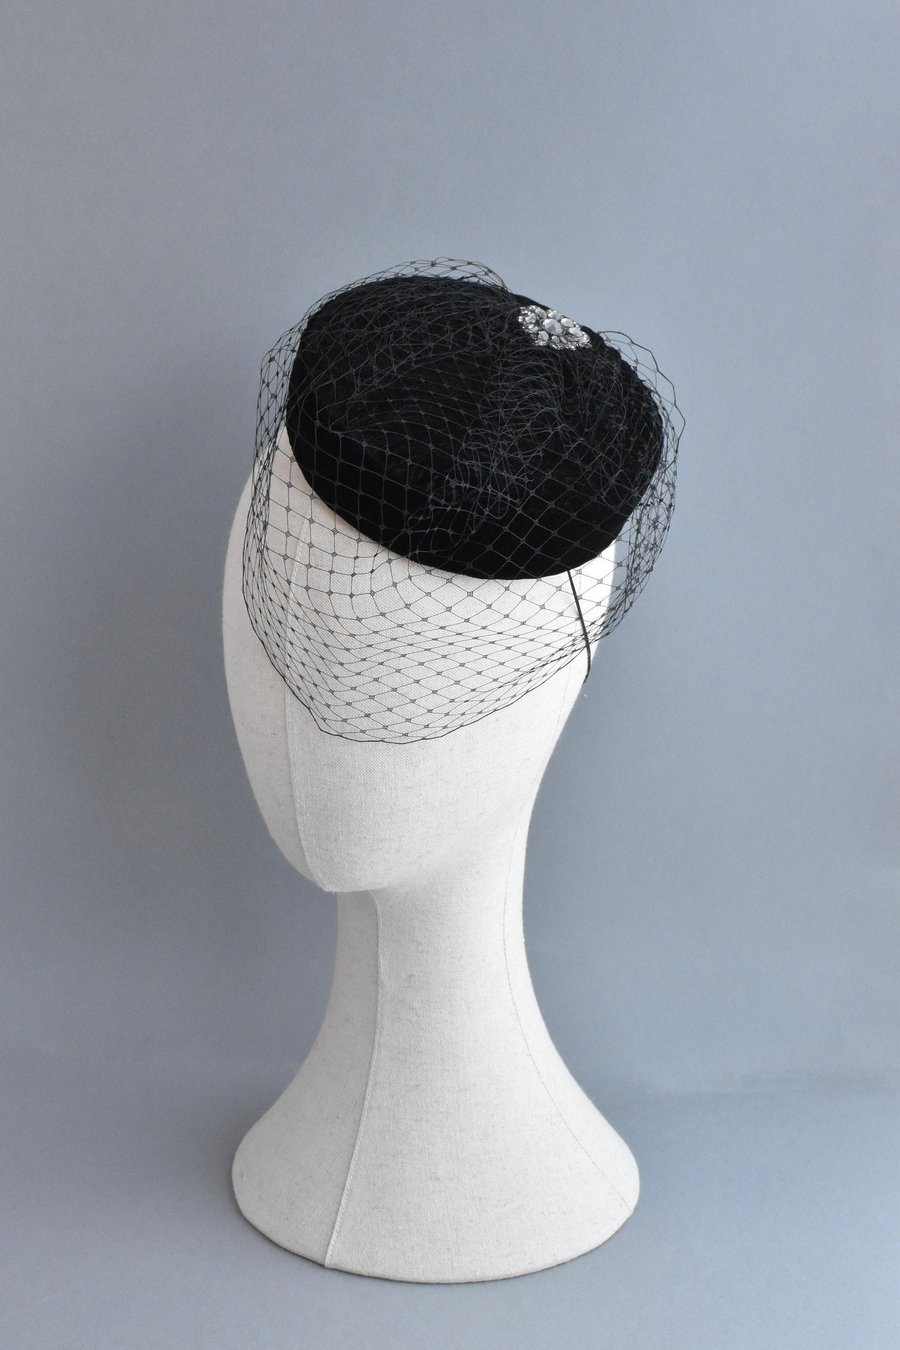 Handcrafted Black Velvet Pillbox Hat with Black Birdcage Veil